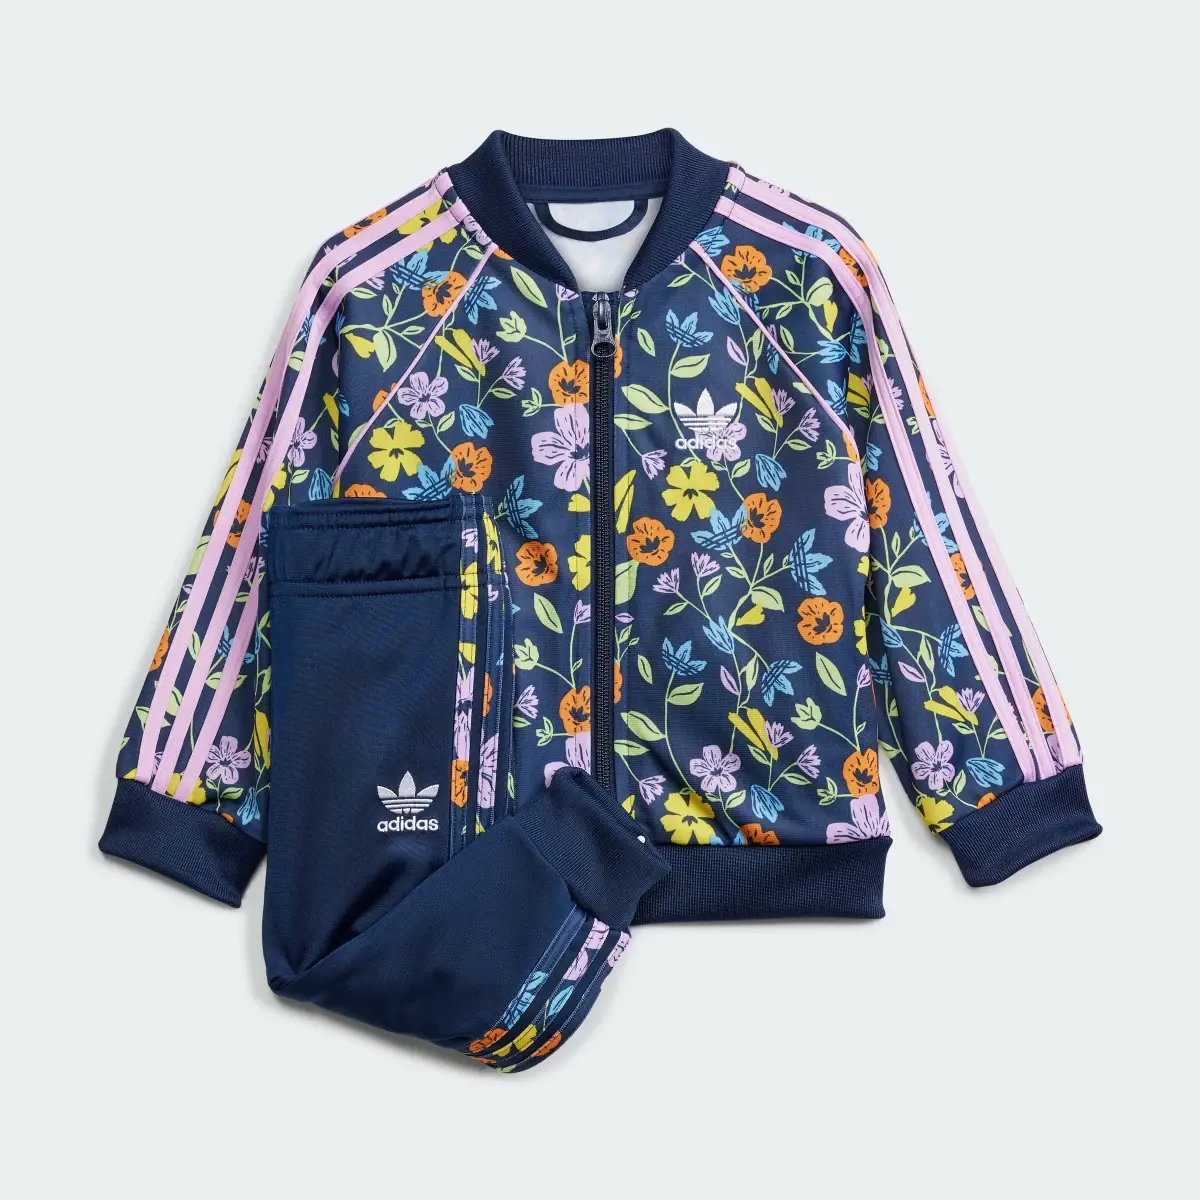 Adidas Floral SST Track Suit. 2